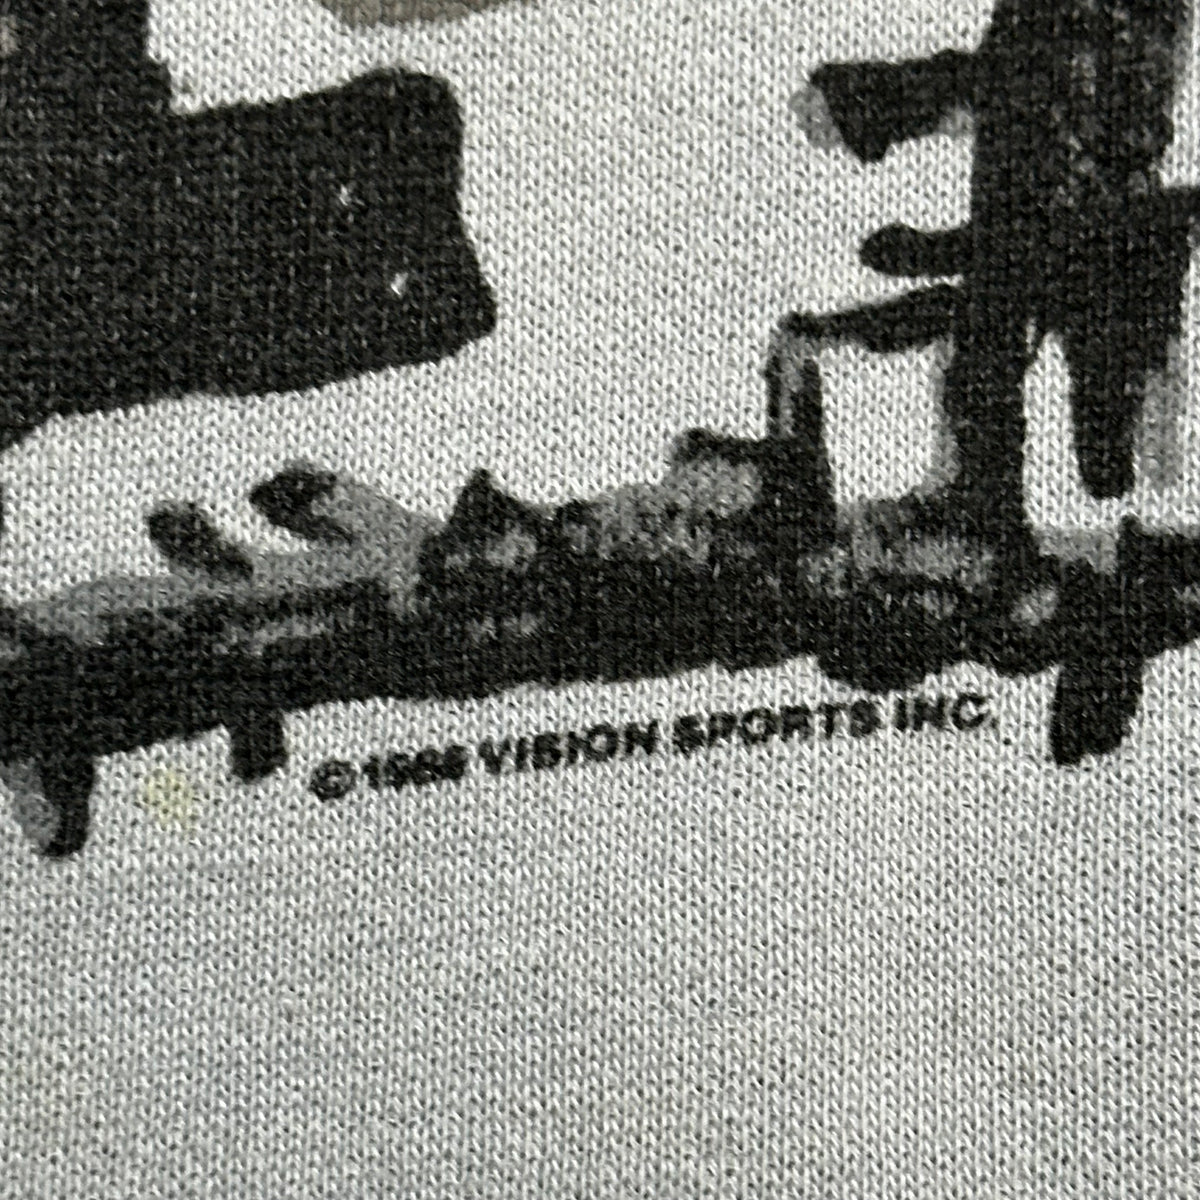 Vintage 80's Vision Sports Order Non Order Crewneck Sweater Skateboard Gear